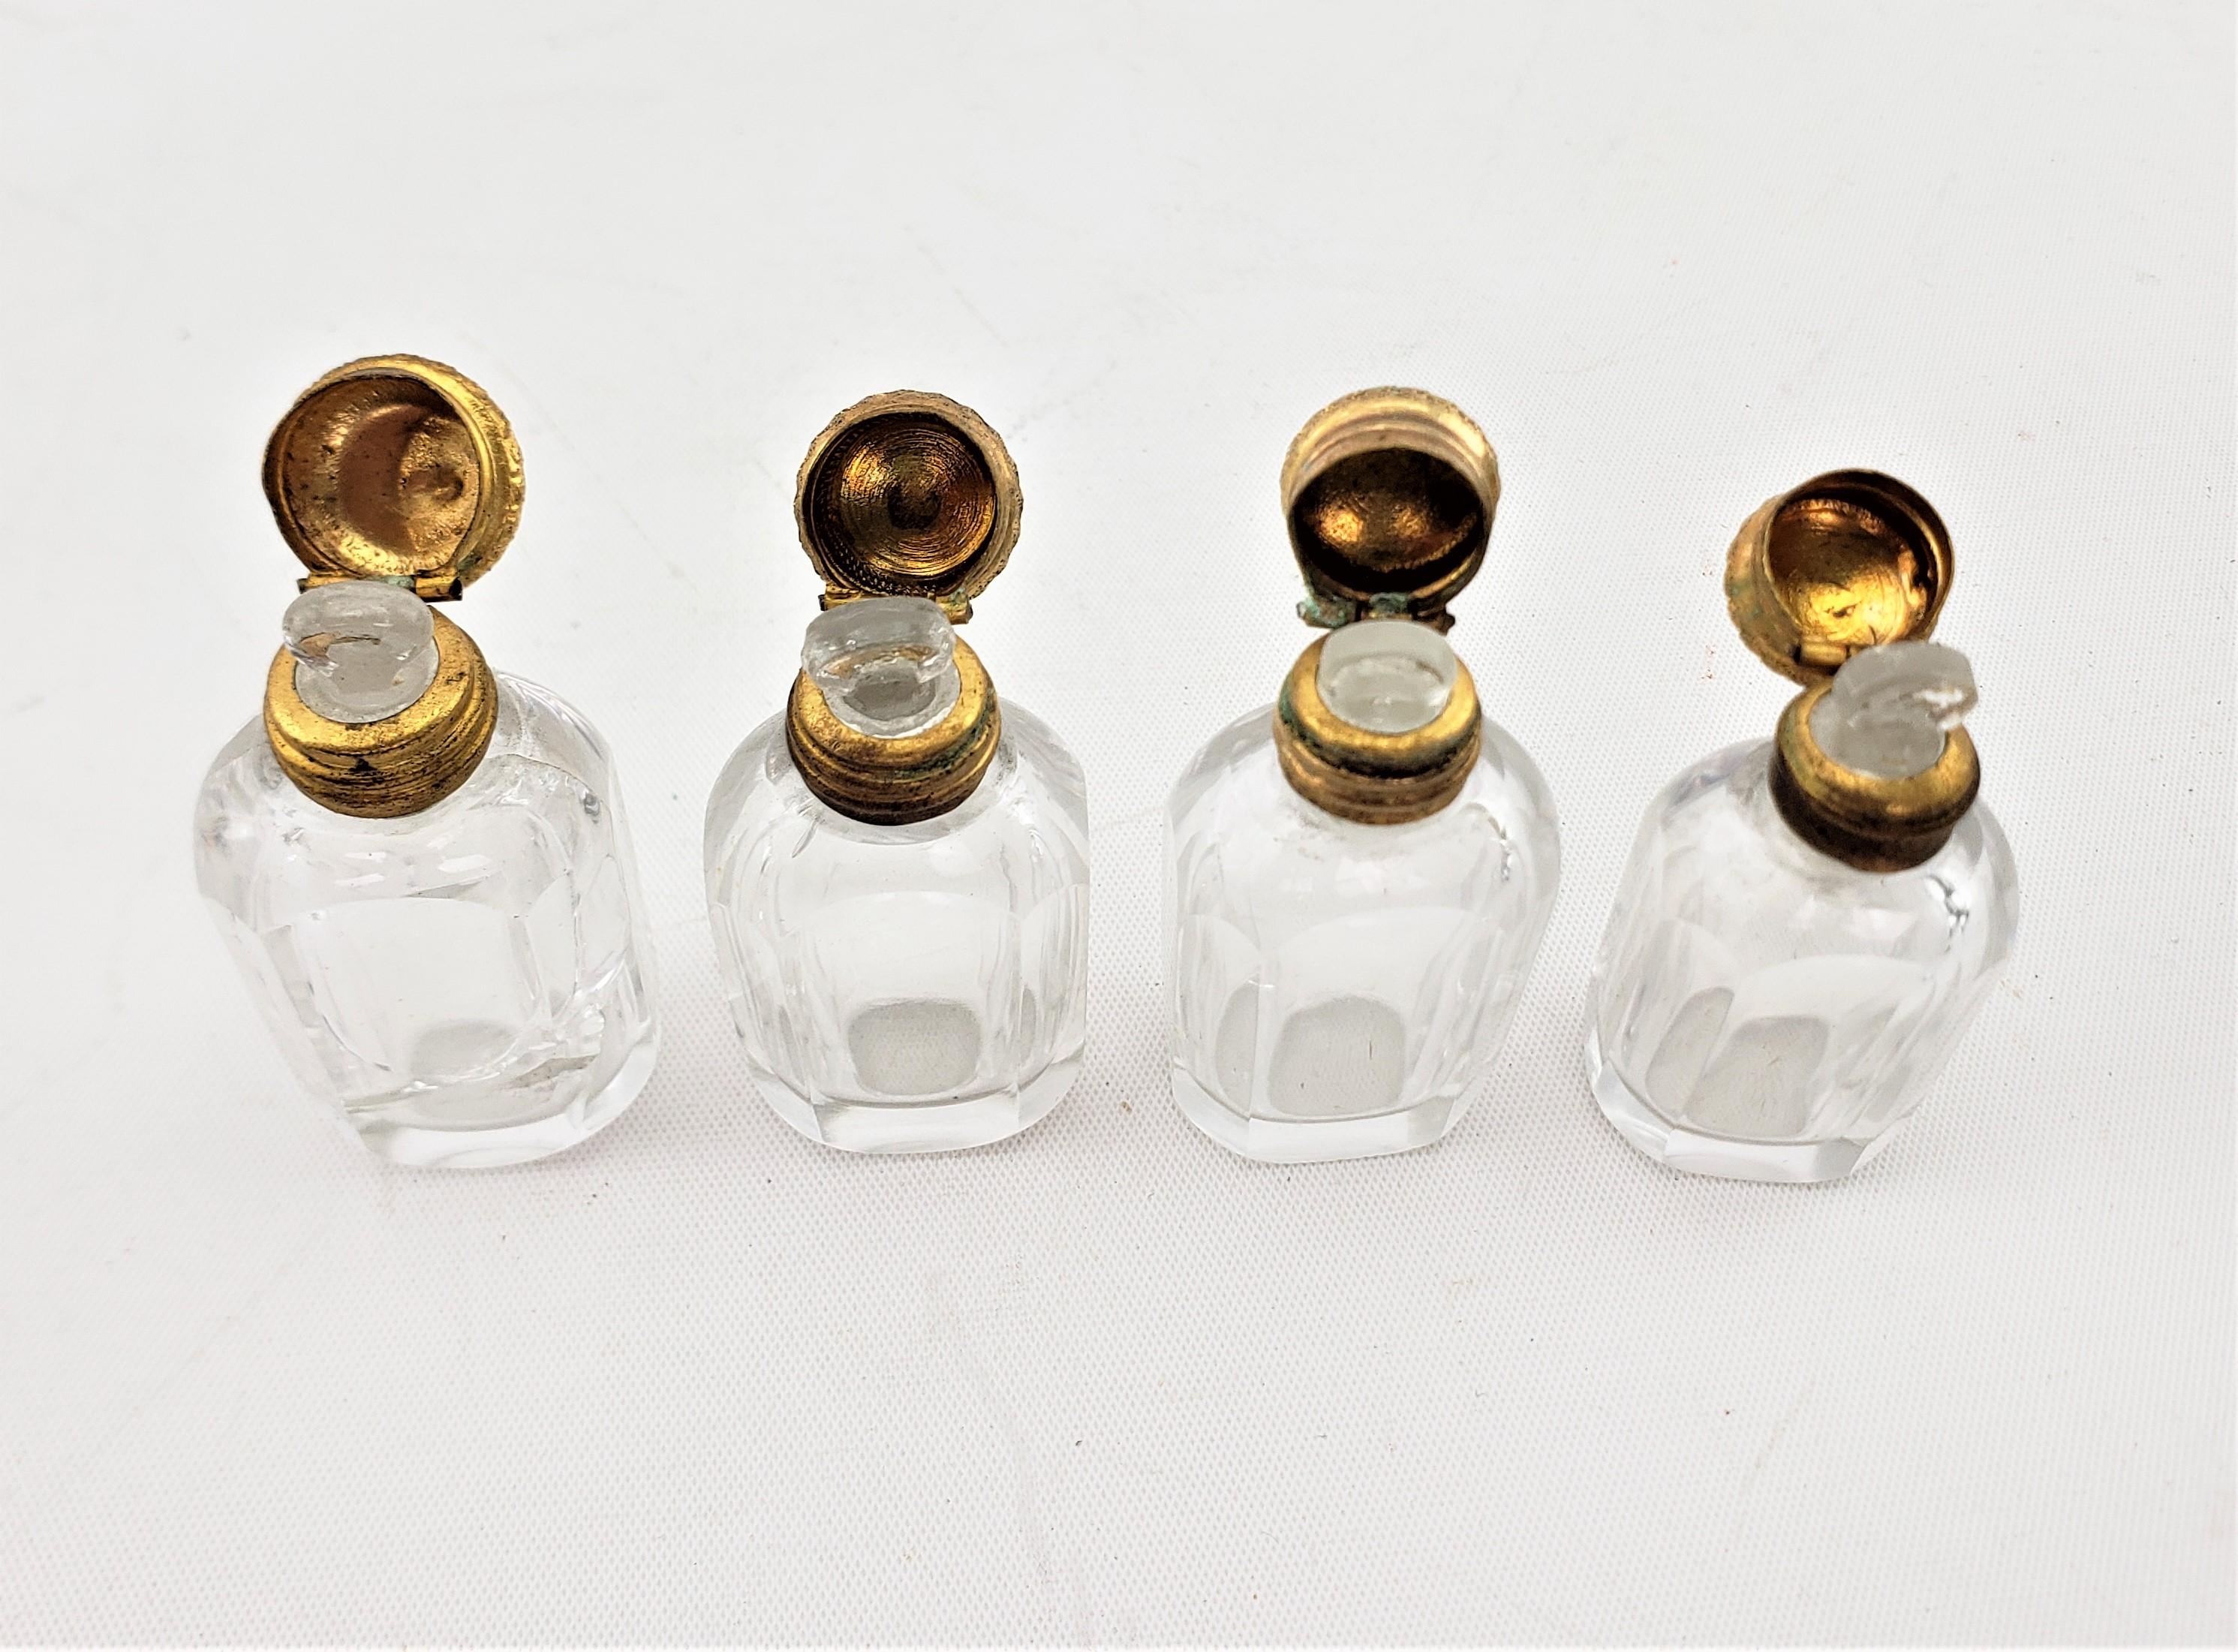 Antique Art Nouveau 3 Glass Perfume or Scent Bottle Set with Inset Shells For Sale 3